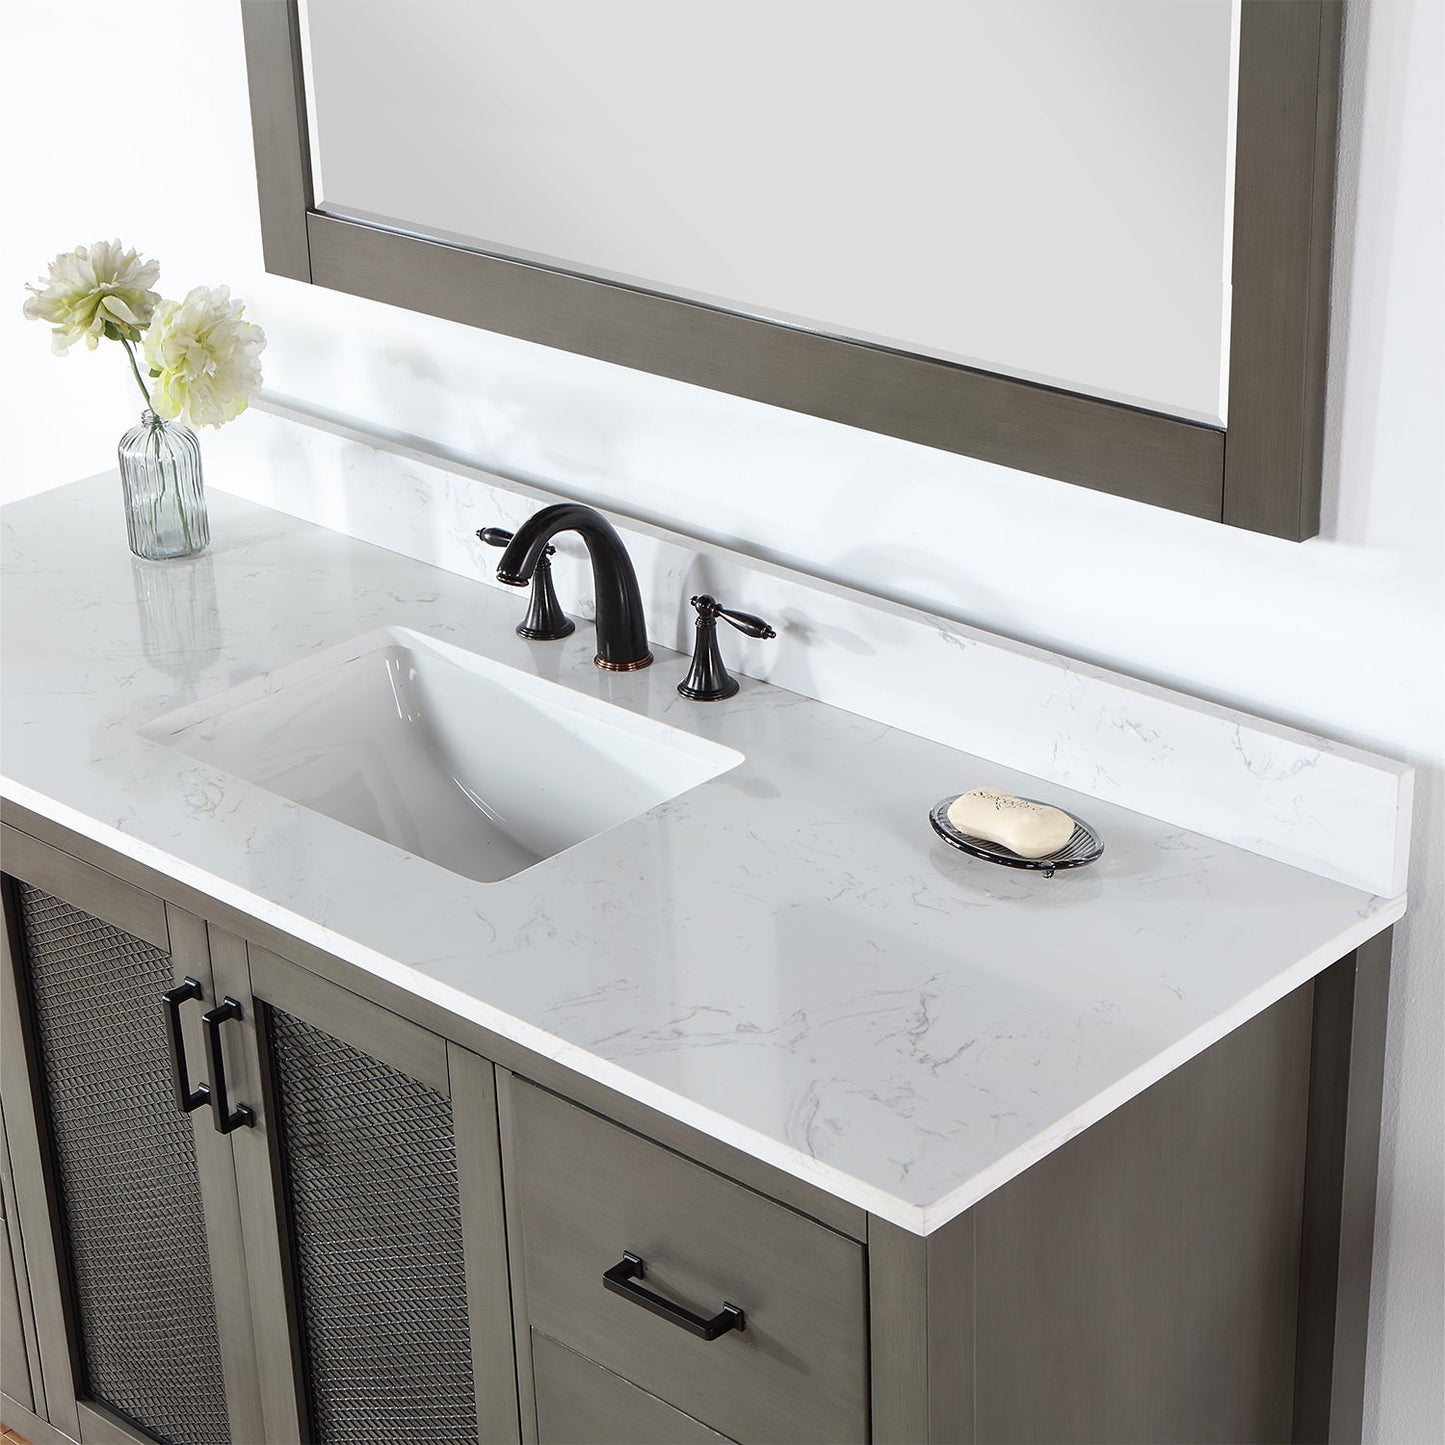 Hadiya 60" Single Bathroom Vanity Set in Gray Pine